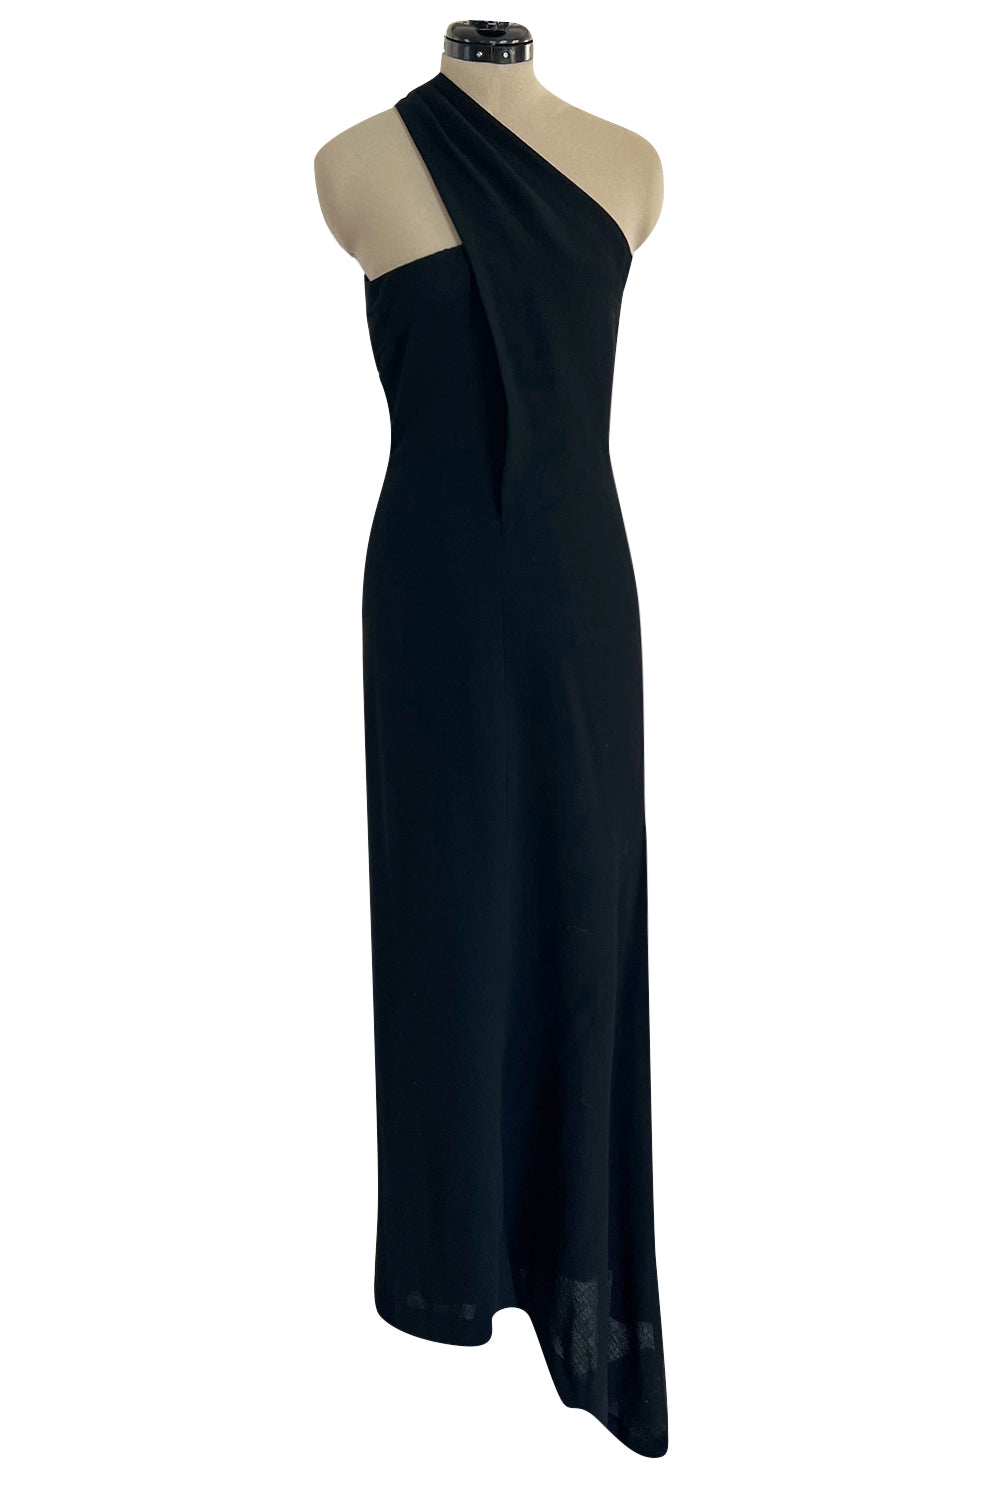 Chanel 1930's Bias Cut Little Black Dress ; the original LBD ! at